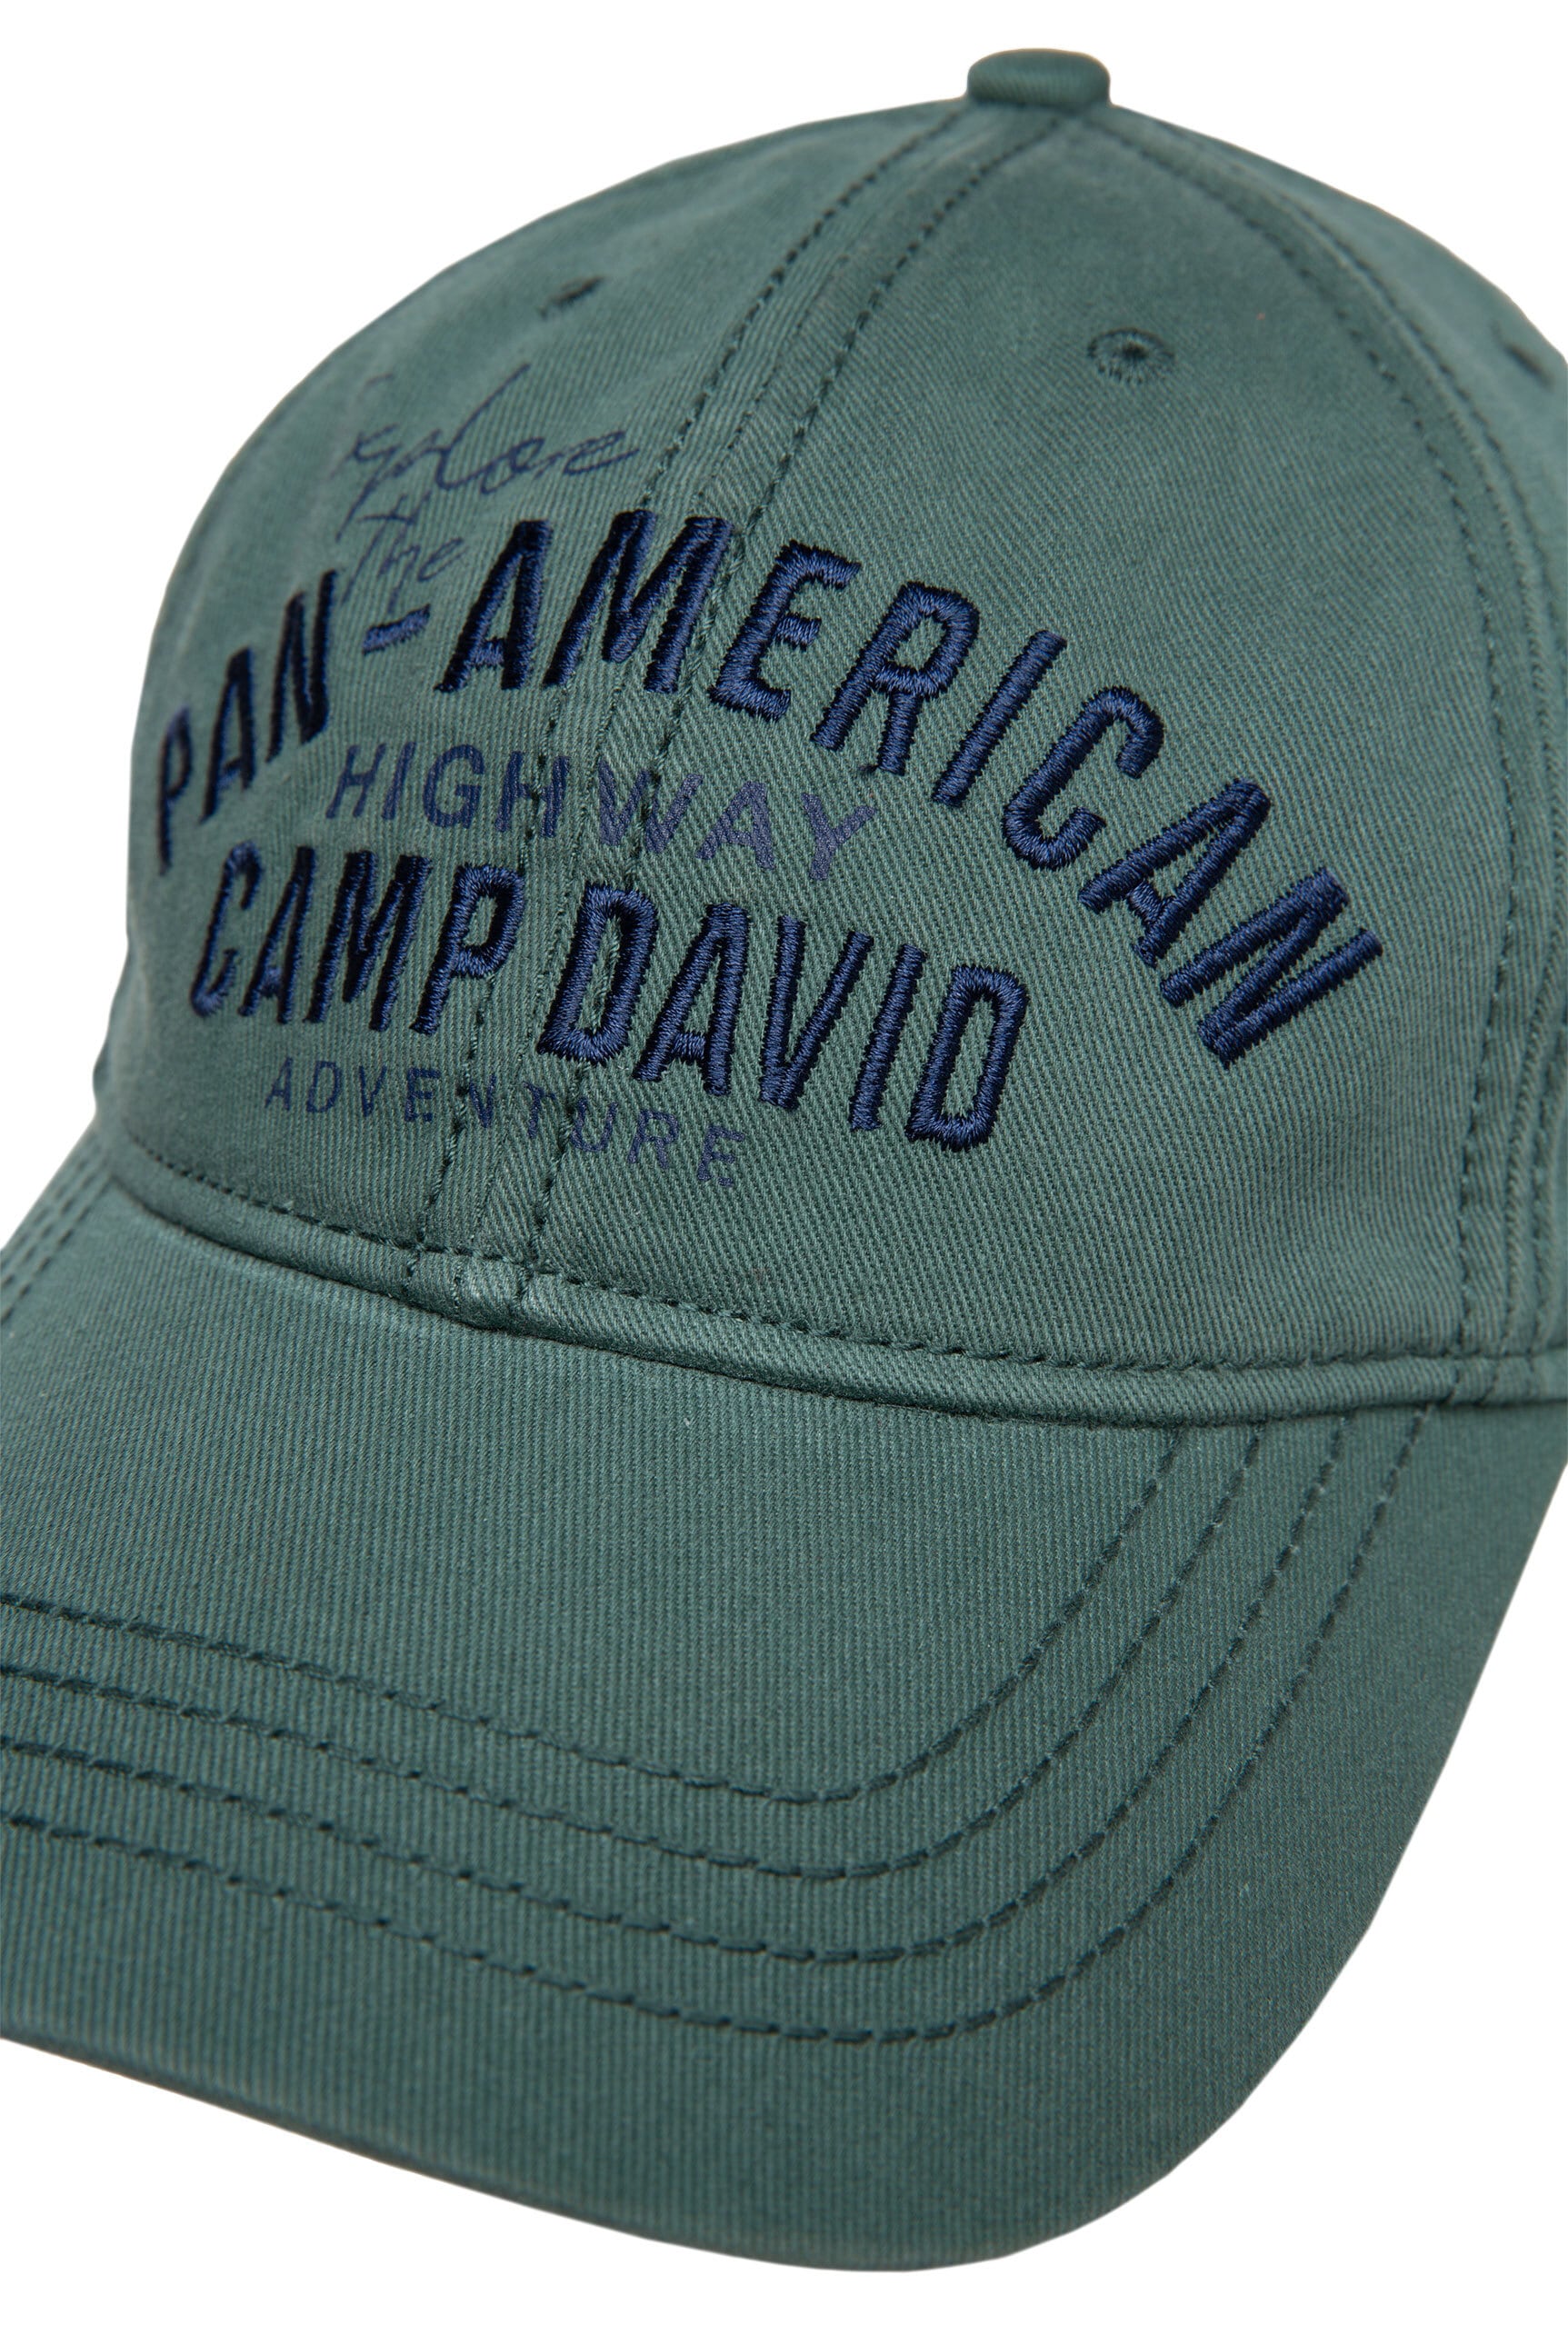 CAMP DAVID Baseball Cap, mit Klipp-Verschluss | BAUR